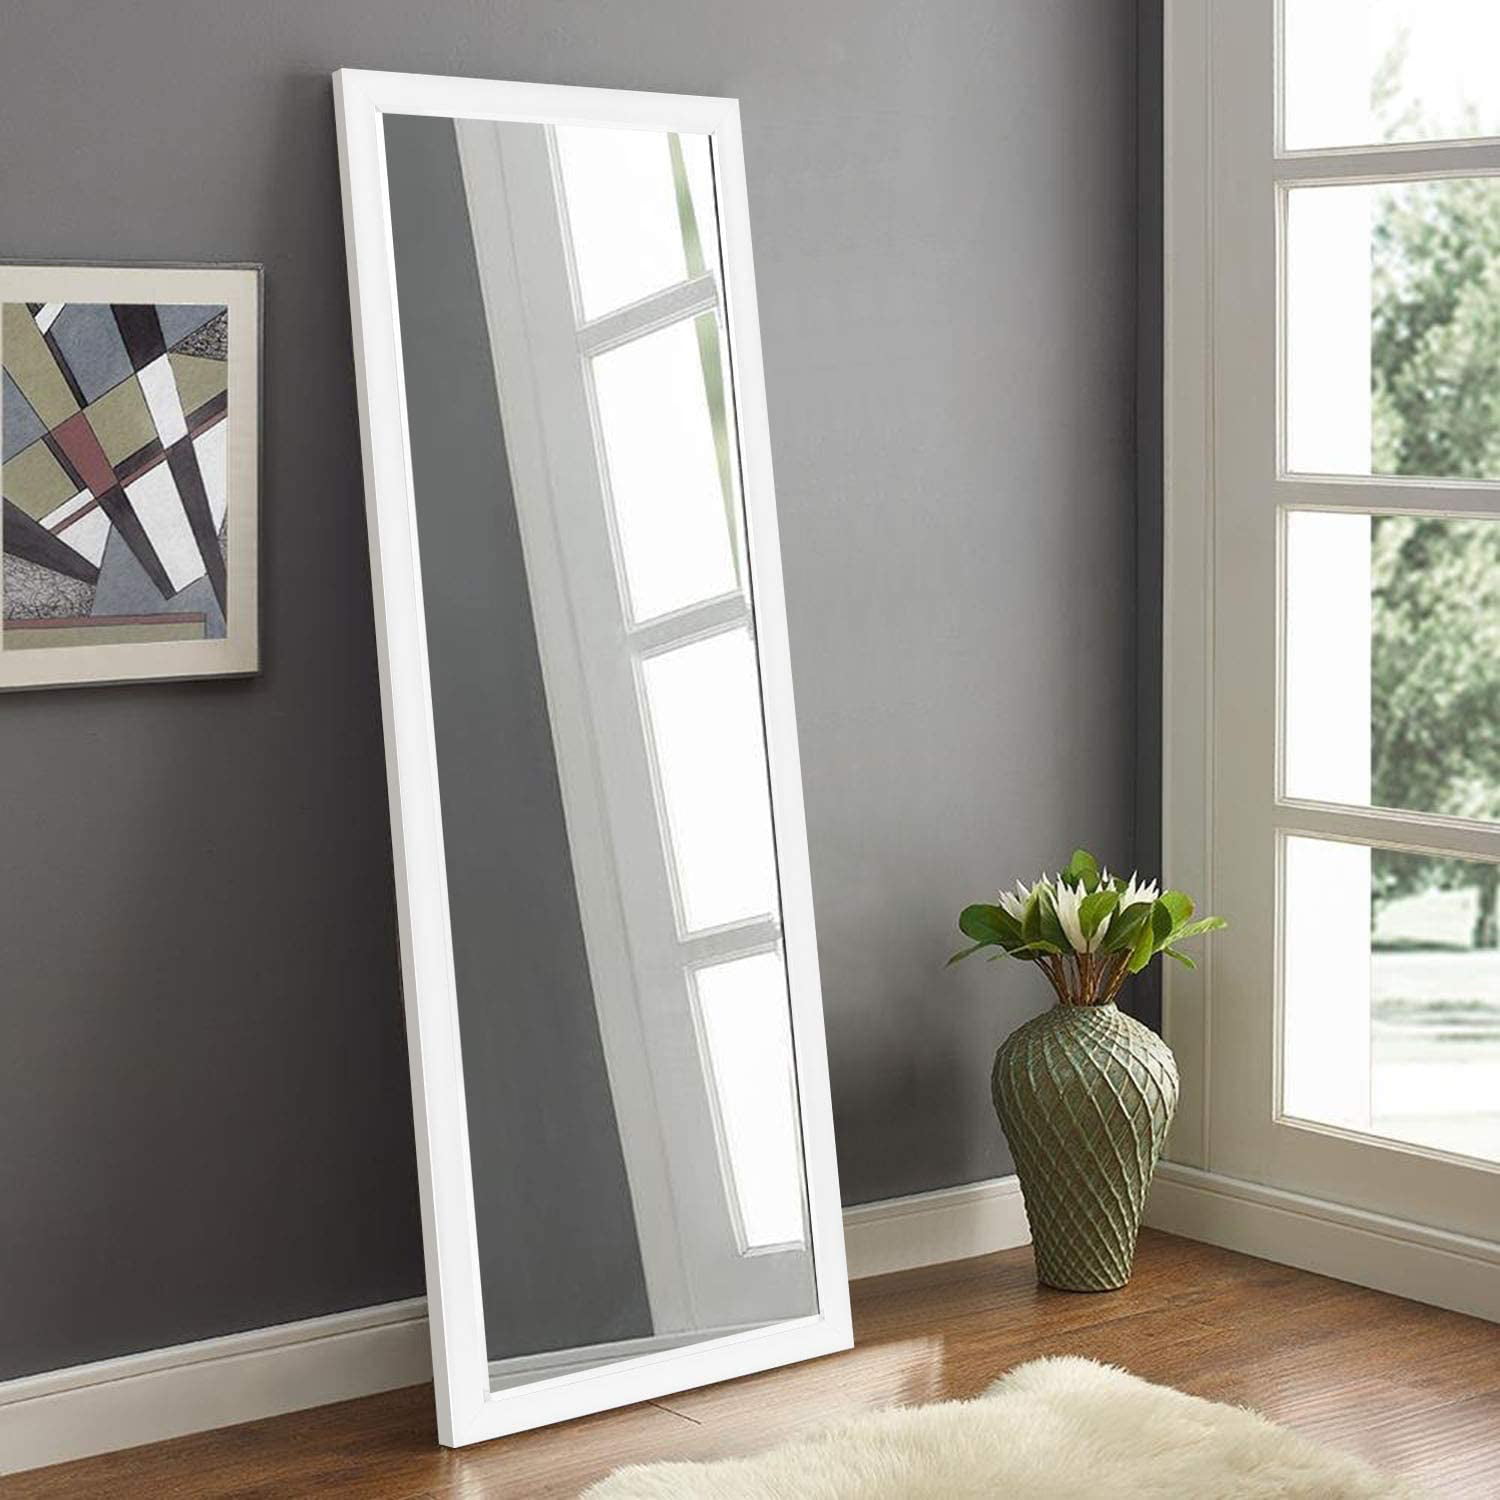 Neutype Full Length Mirror Floor, Where To Put Floor Length Mirror In Bedroom